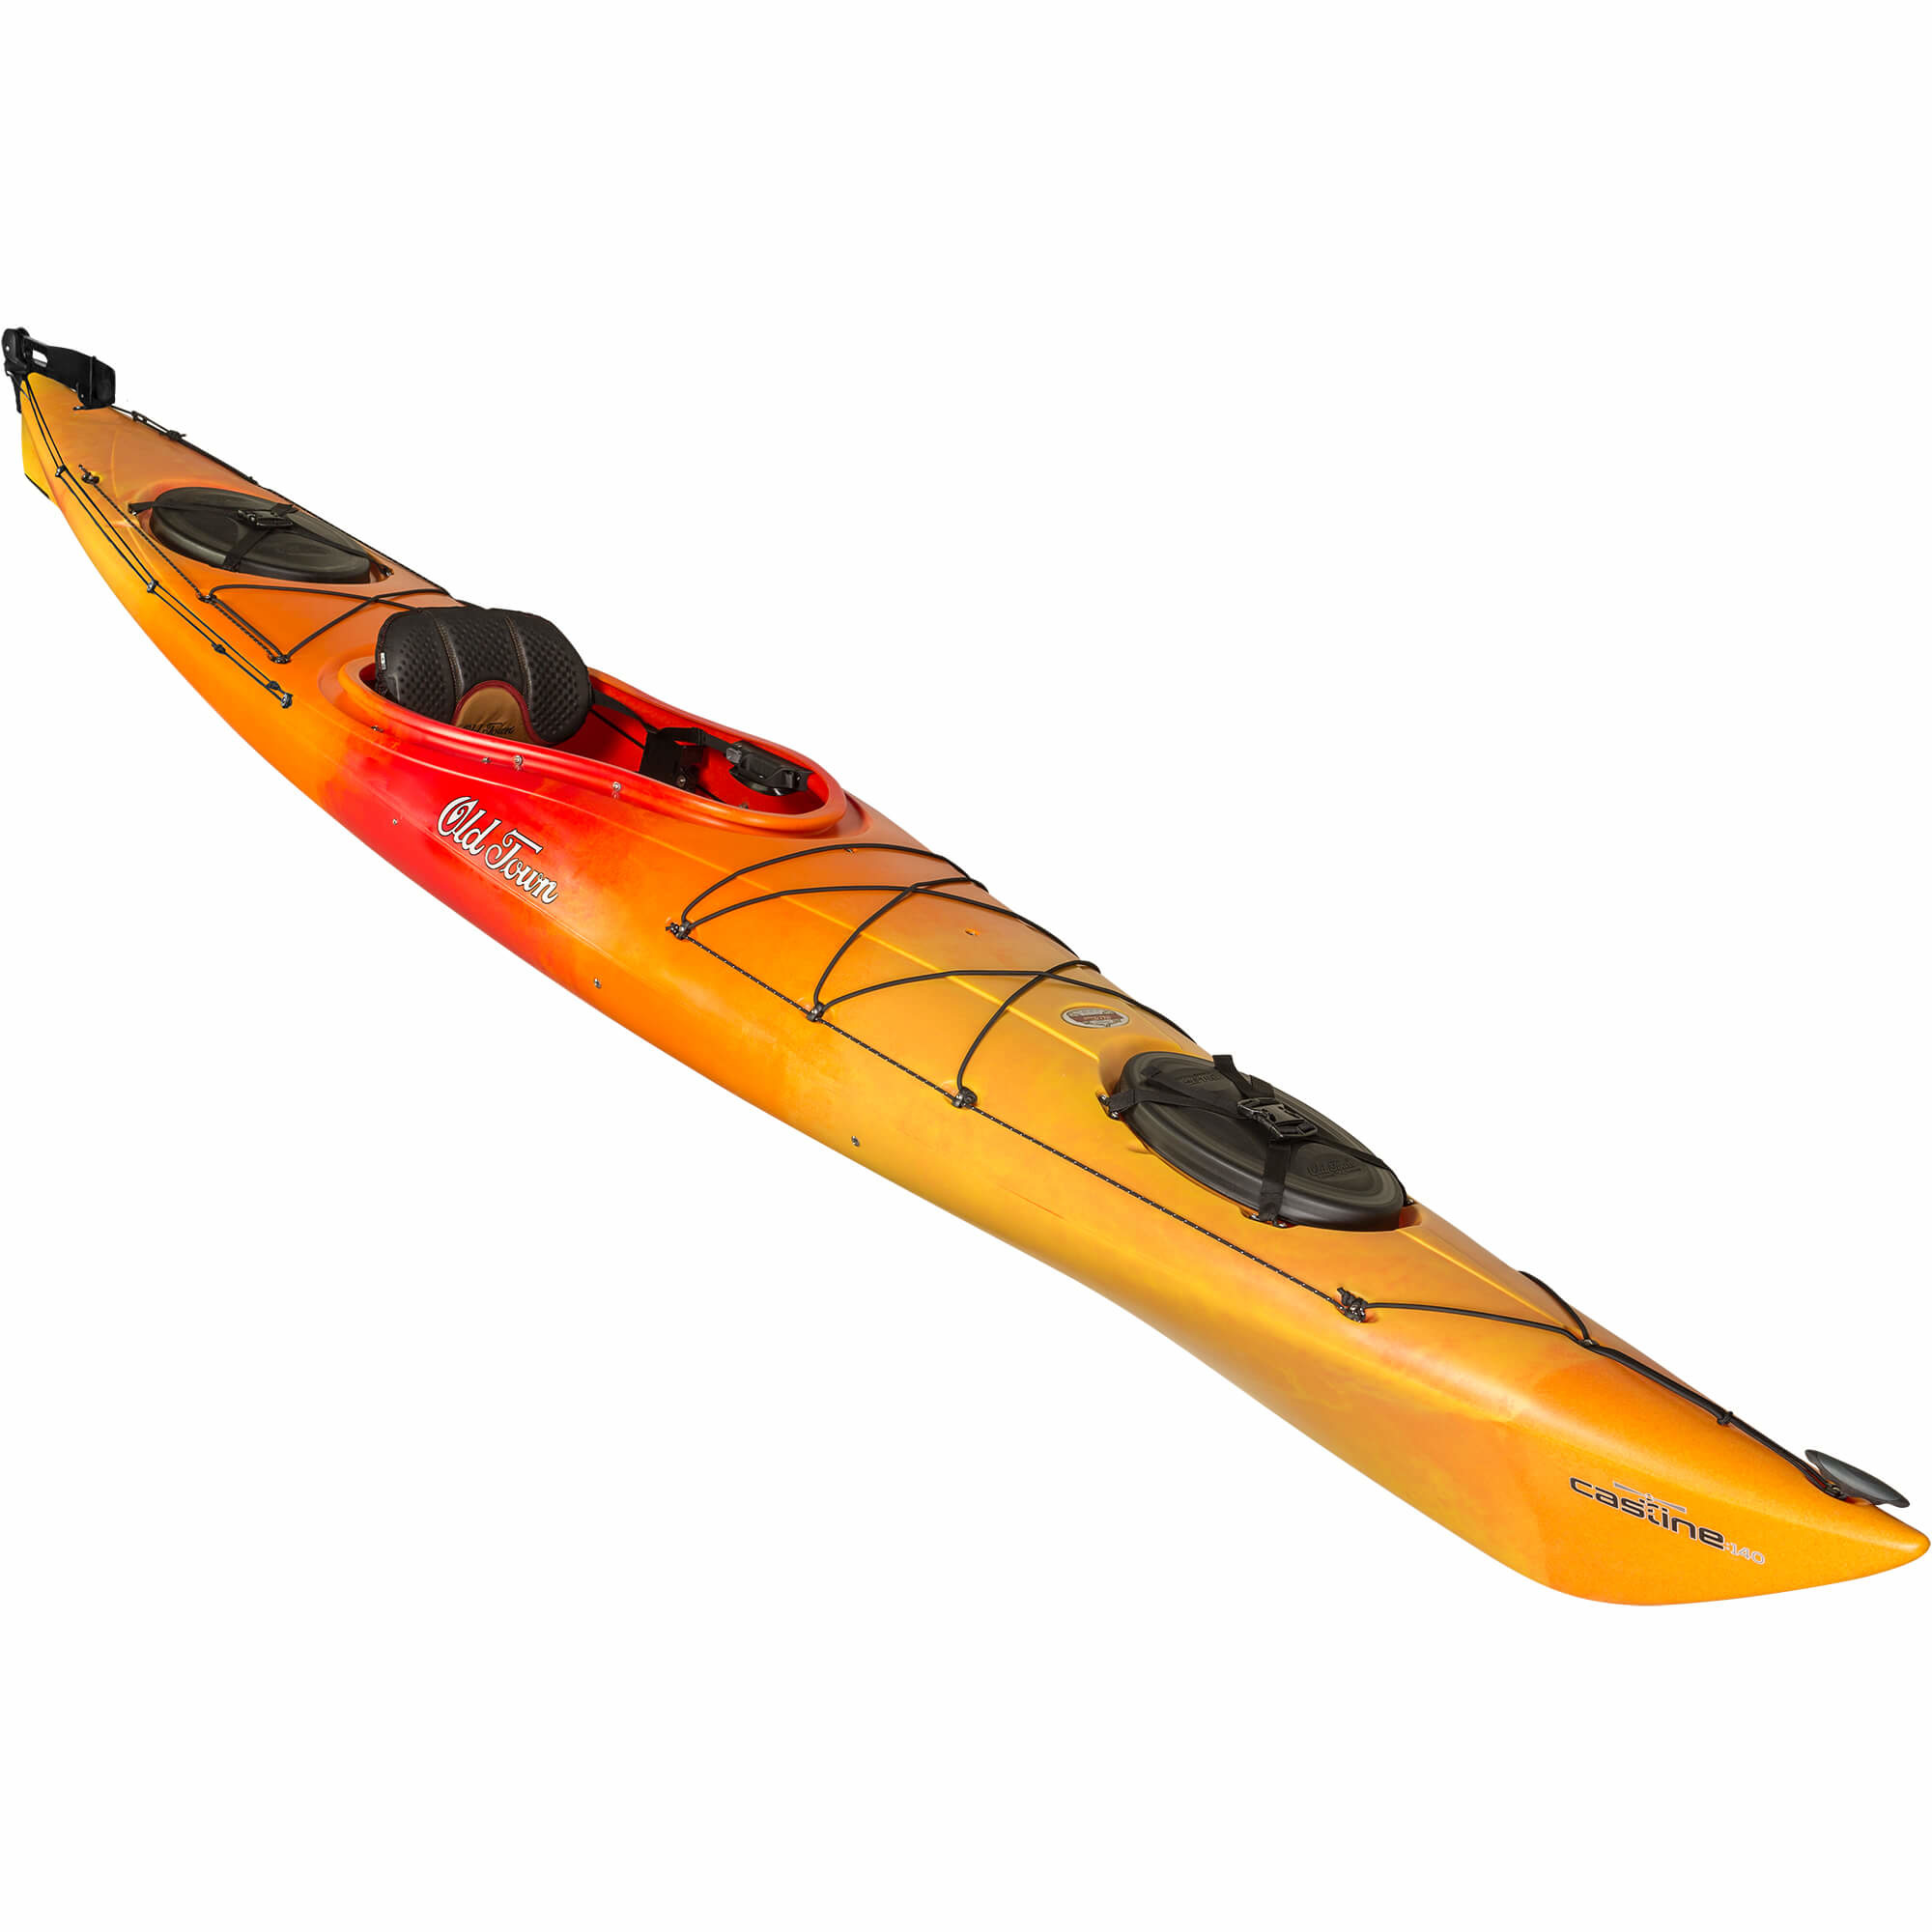 Castine 140 W/ Rudder - PADDLE BOSTON Charles River Canoe and Kayak